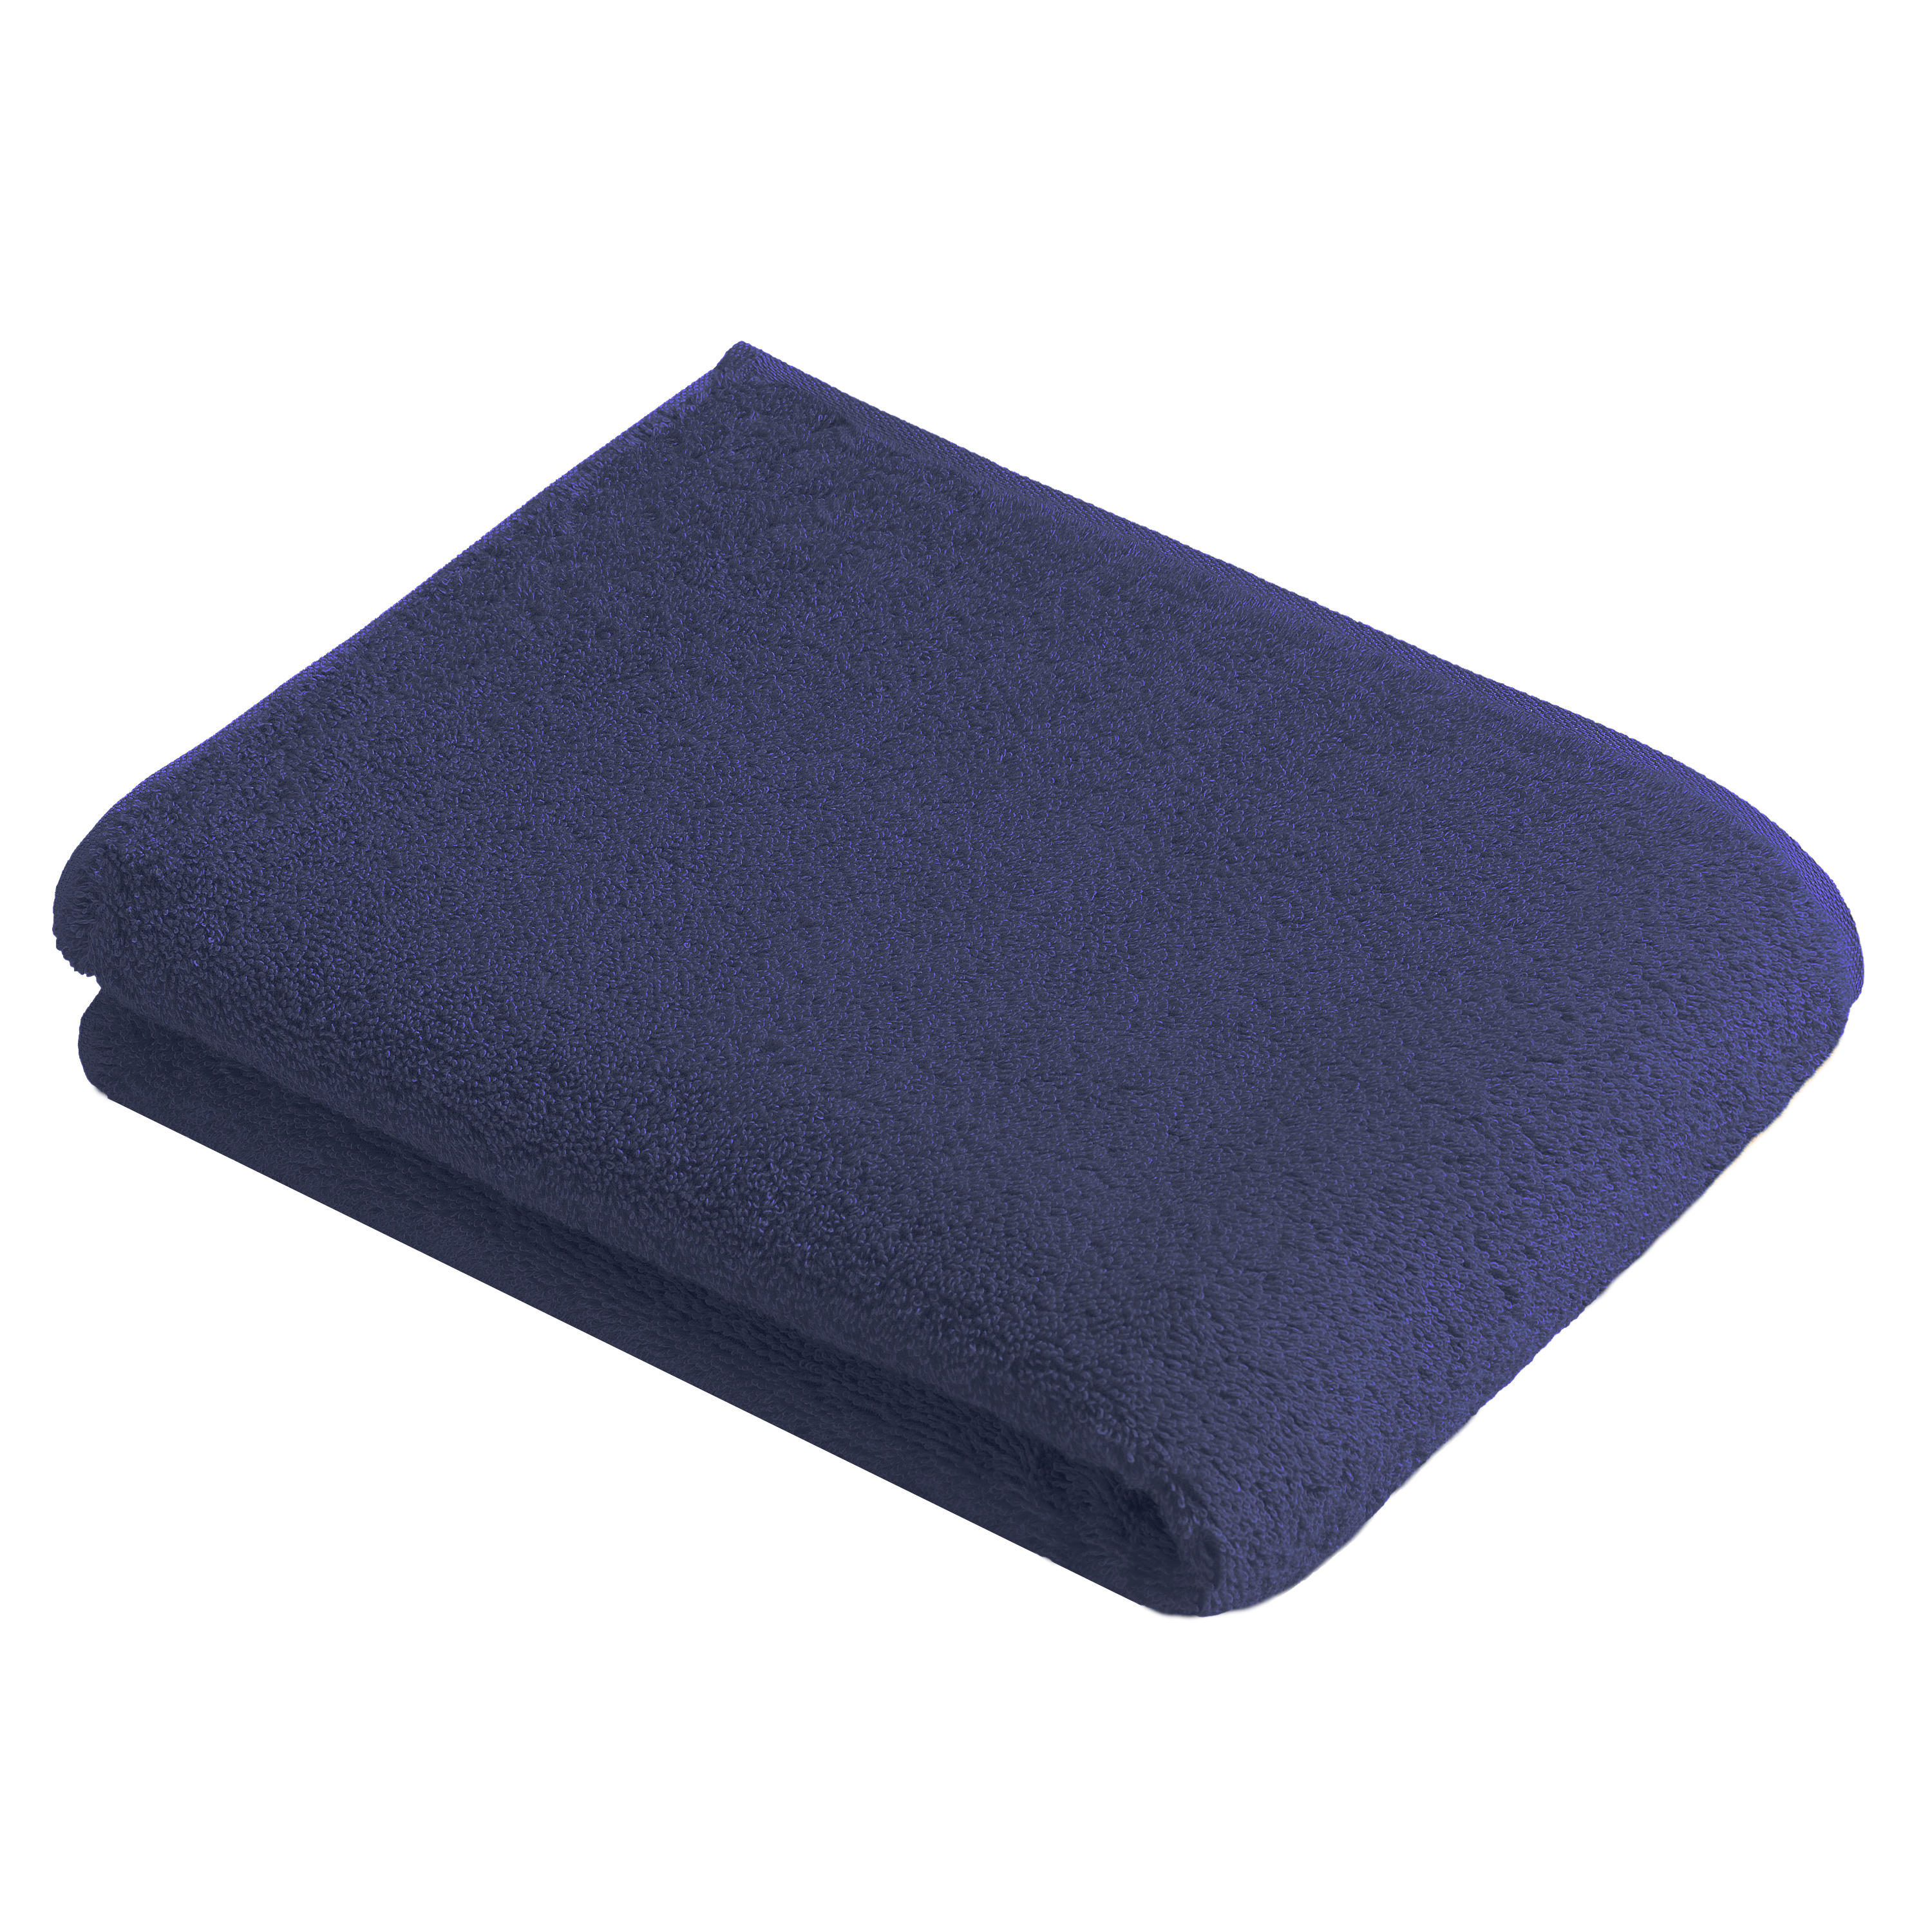 BADETUCH New Generation 80/200 cm  - Blau, Basics, Textil (80/200cm) - Vossen